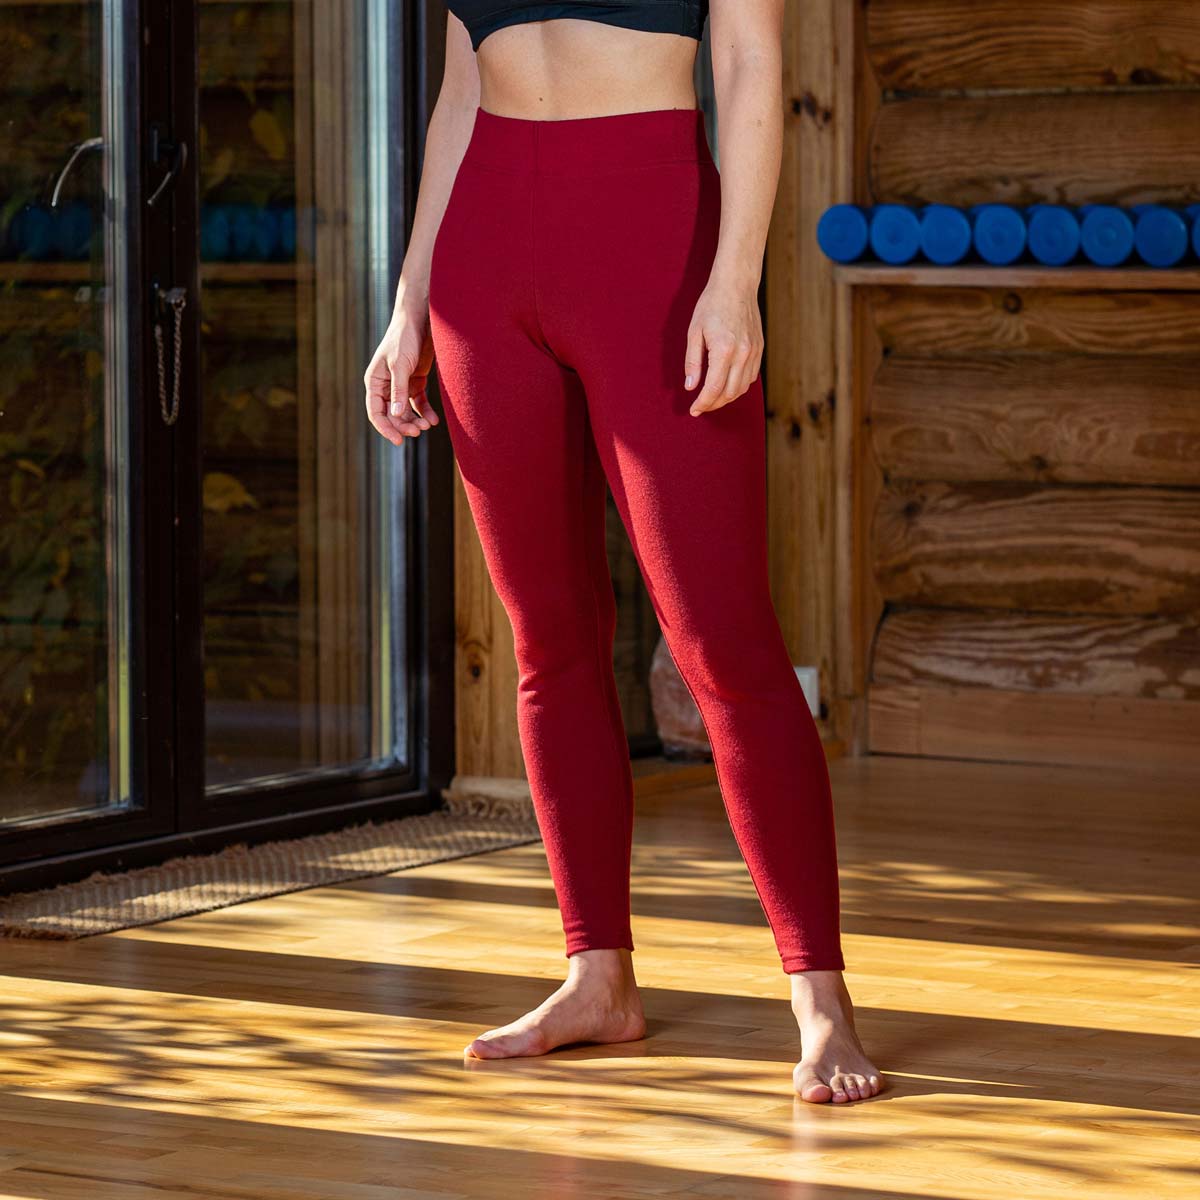 Women's Cherry Red Yoga Pants